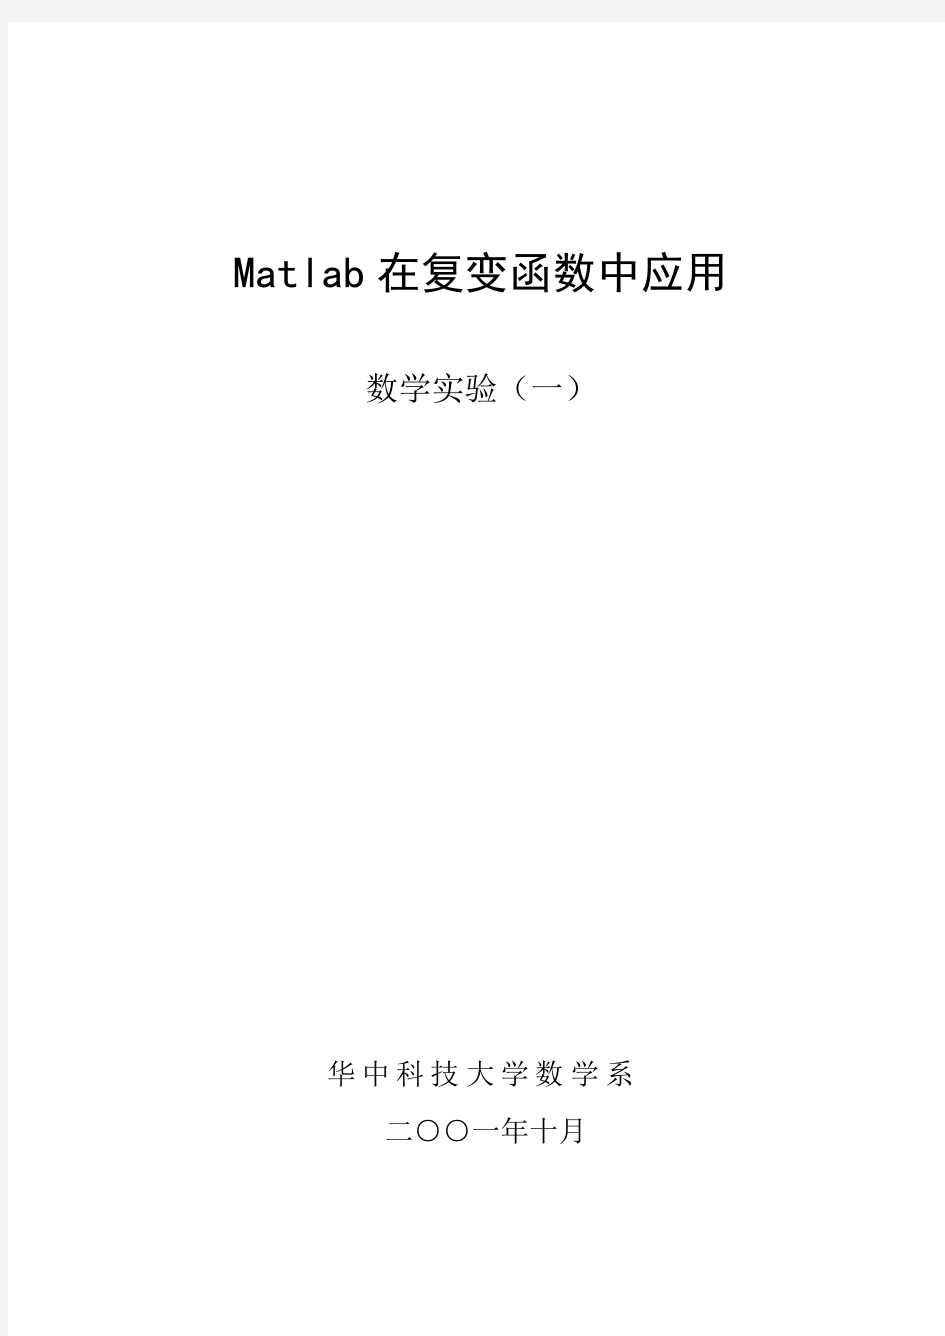 MATLAB在复变函数中的应用